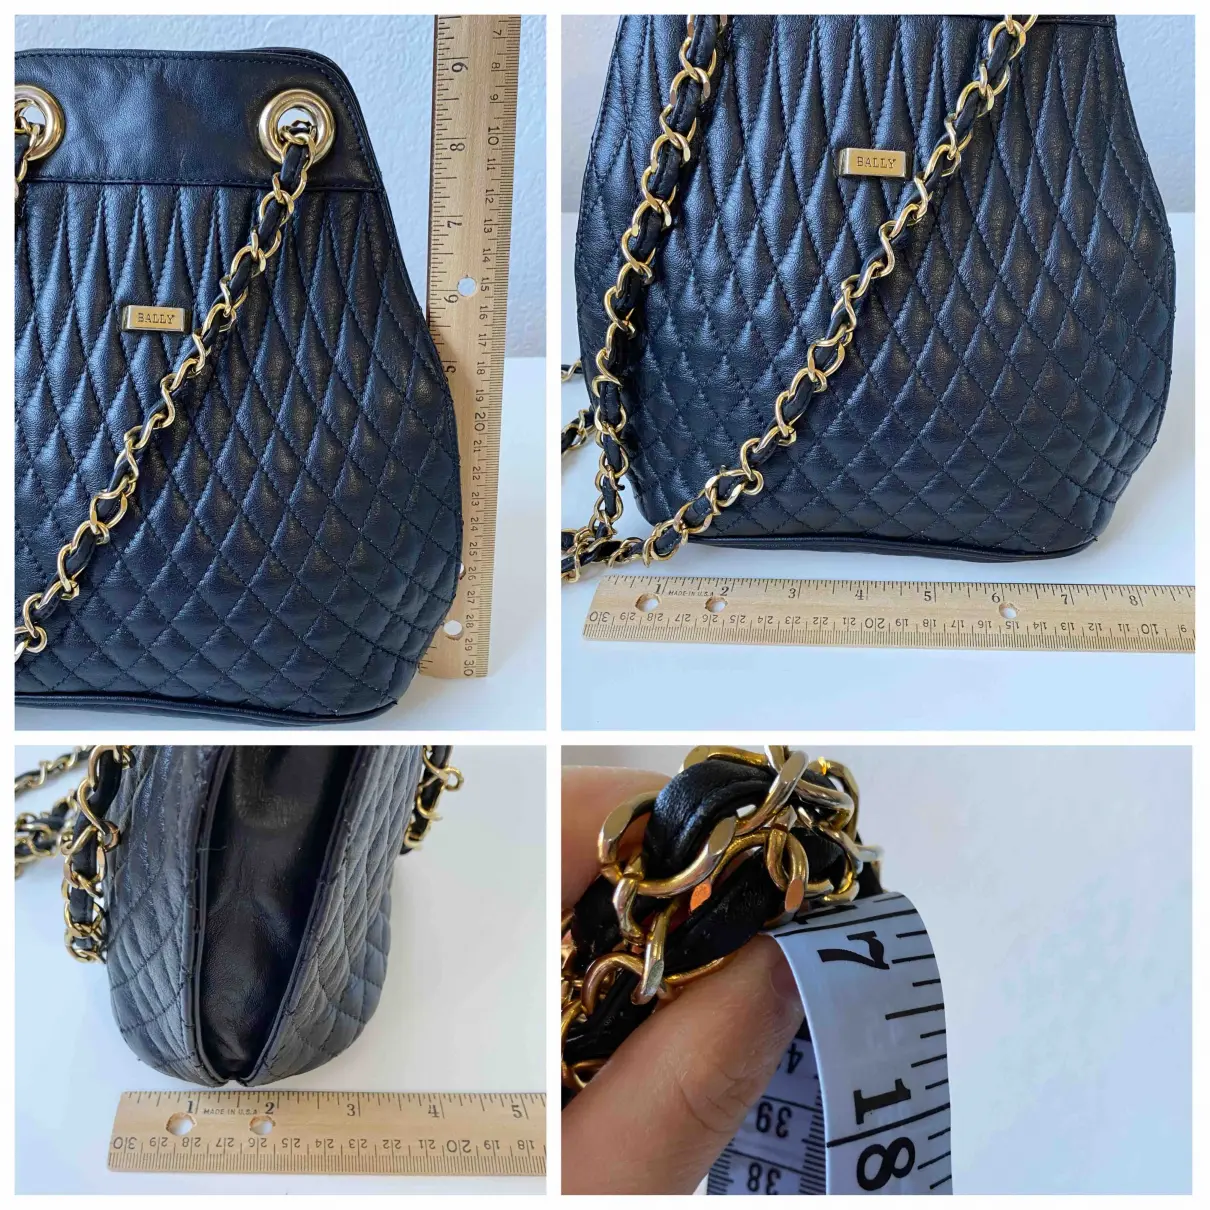 Buy Bally Leather handbag online - Vintage